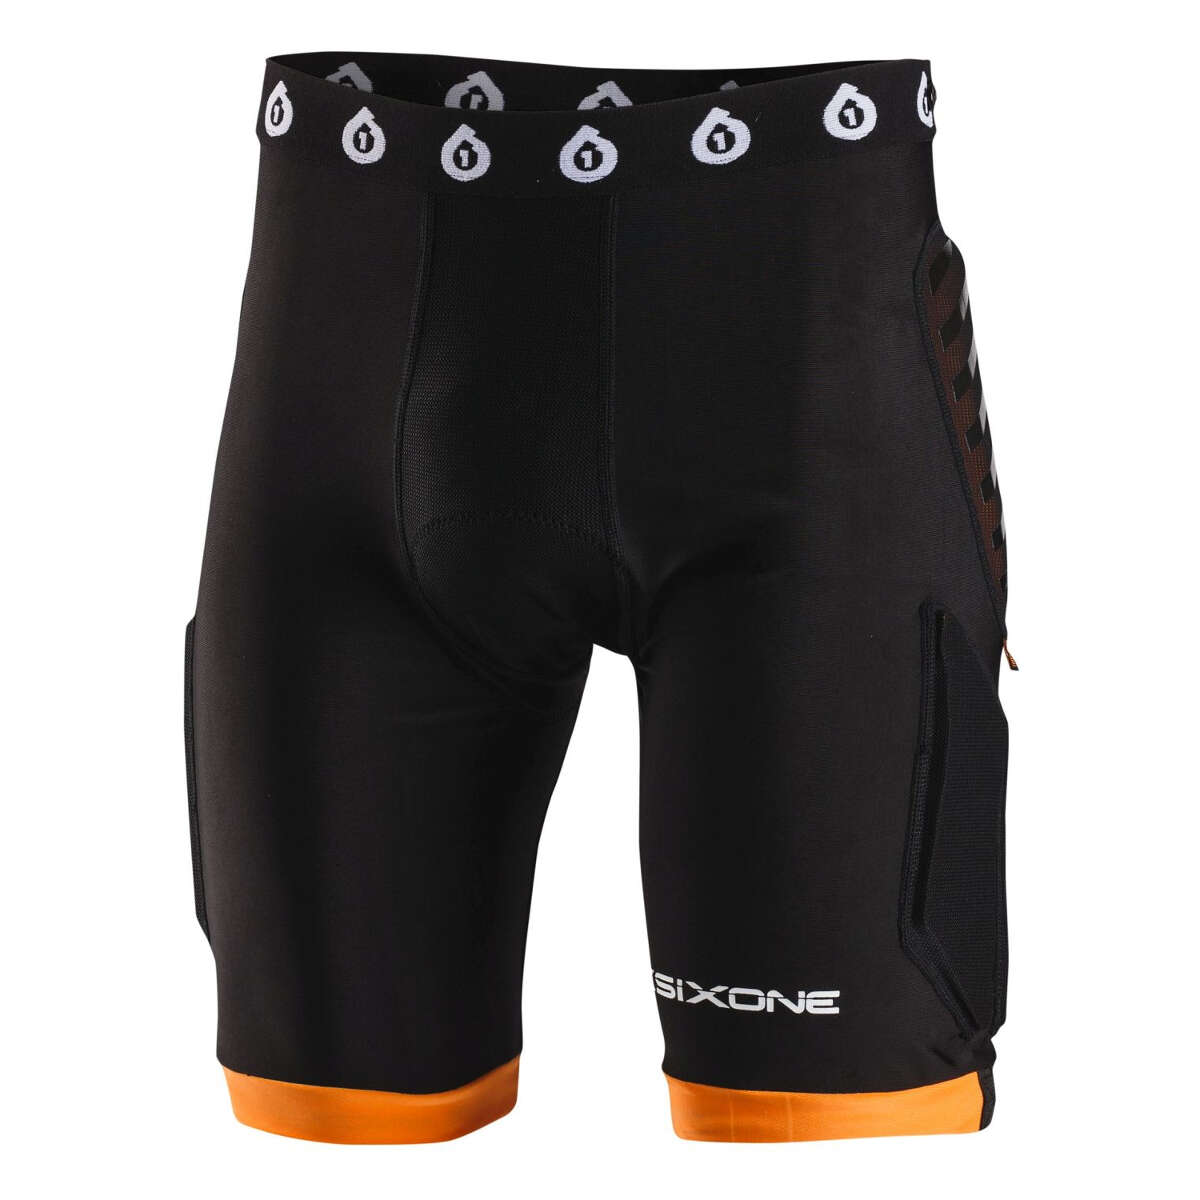 SixSixOne Protector Shorts EVO Compression Chamois - Black